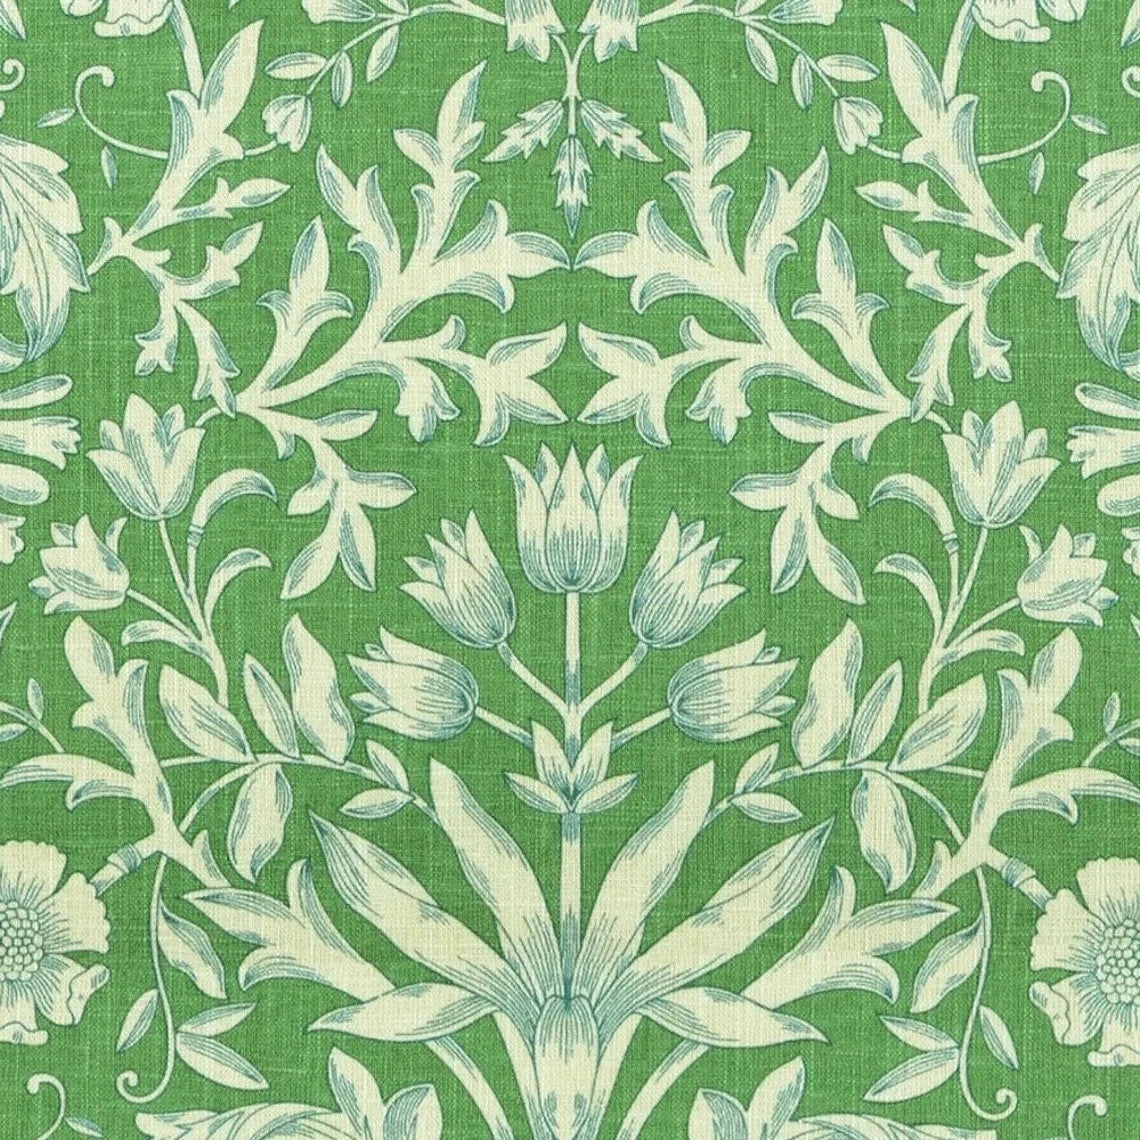 pillow sham in flourish verdura green floral damask